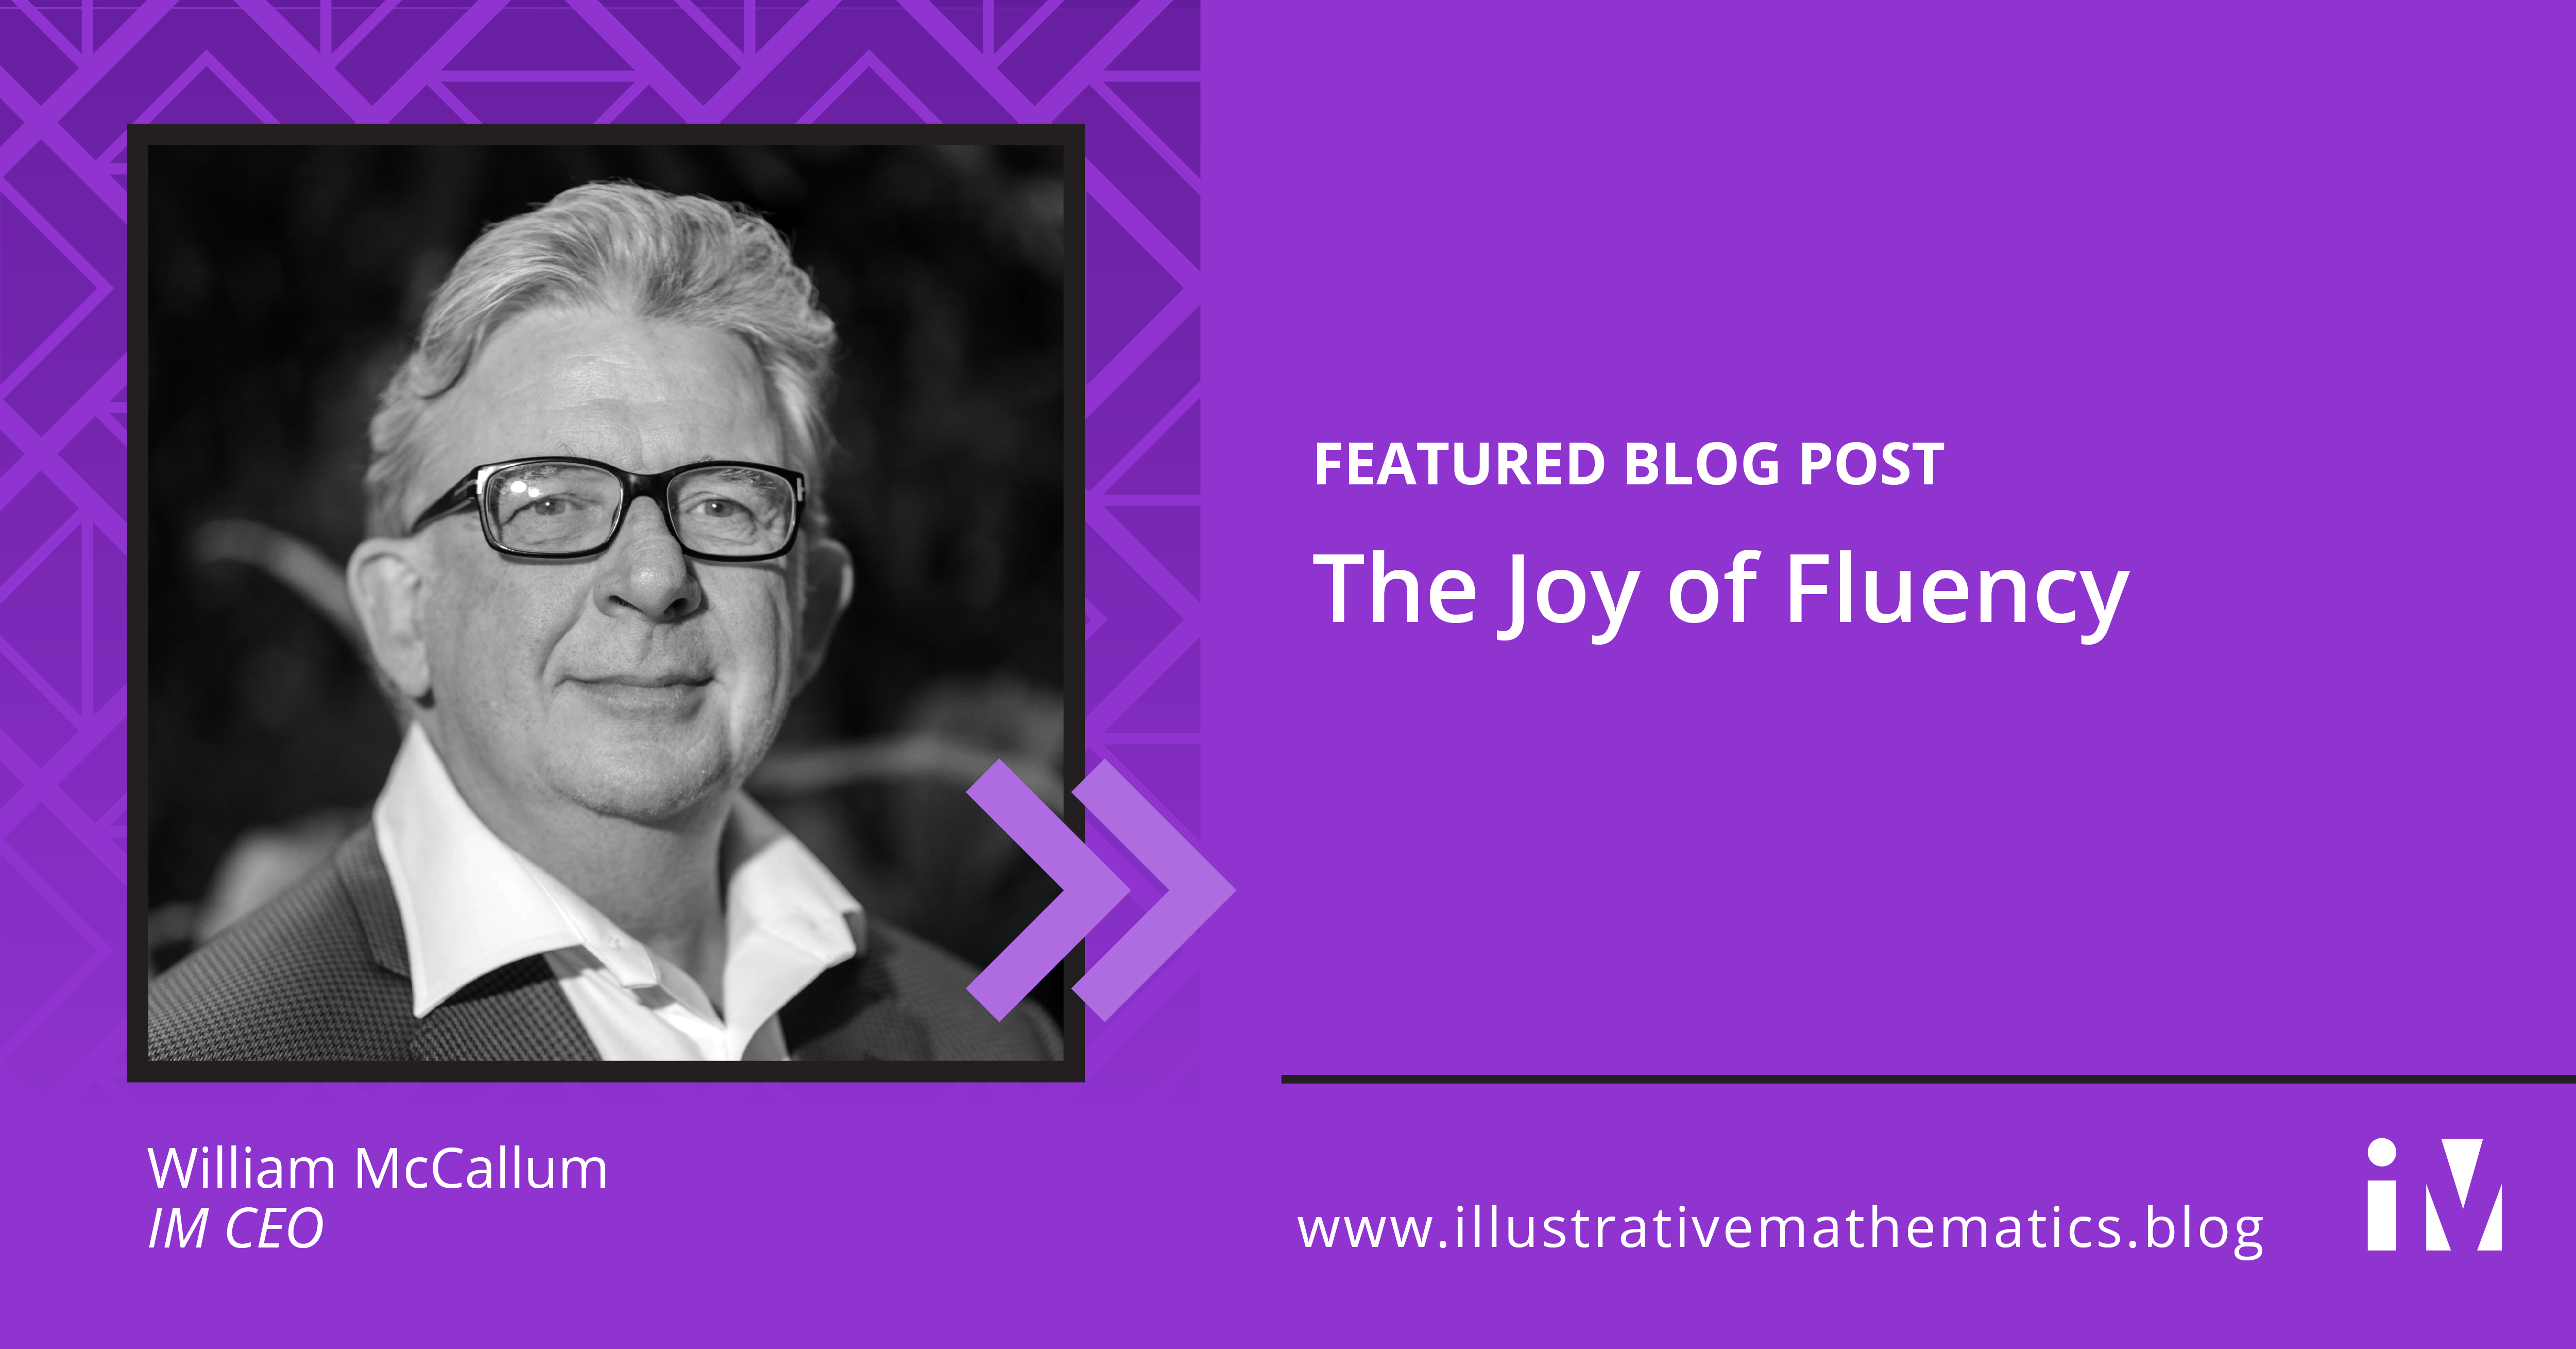 The Joy of Fluency